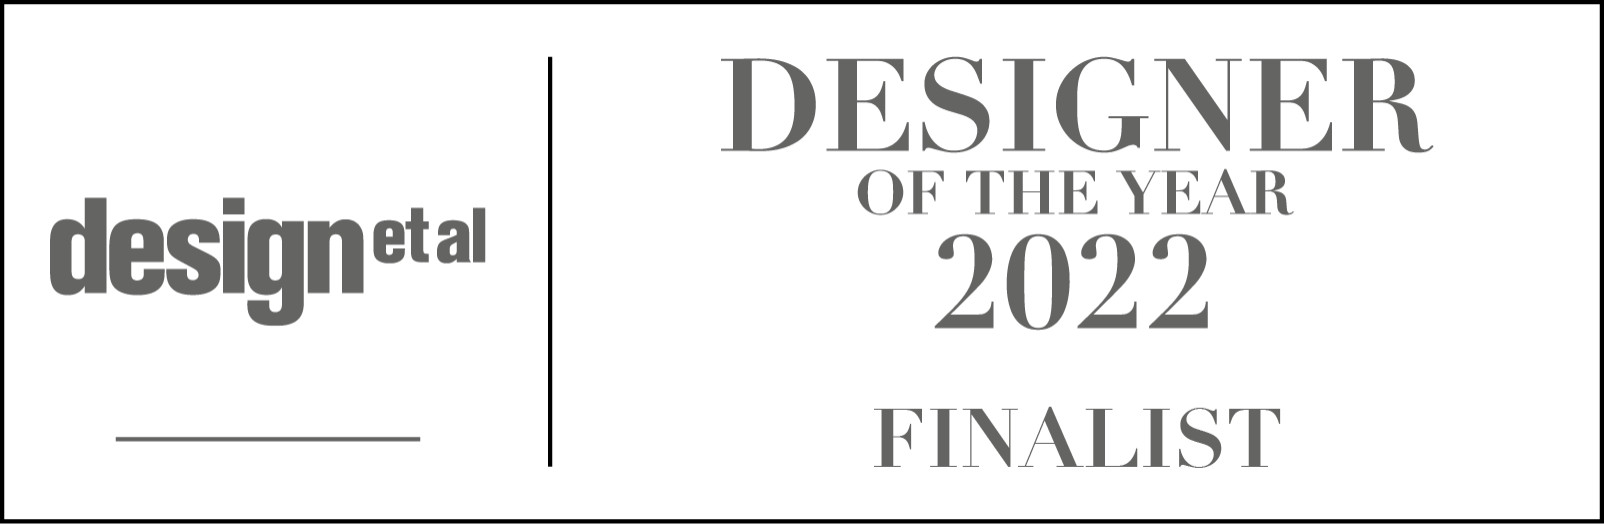 Designer of the year finalist 2022